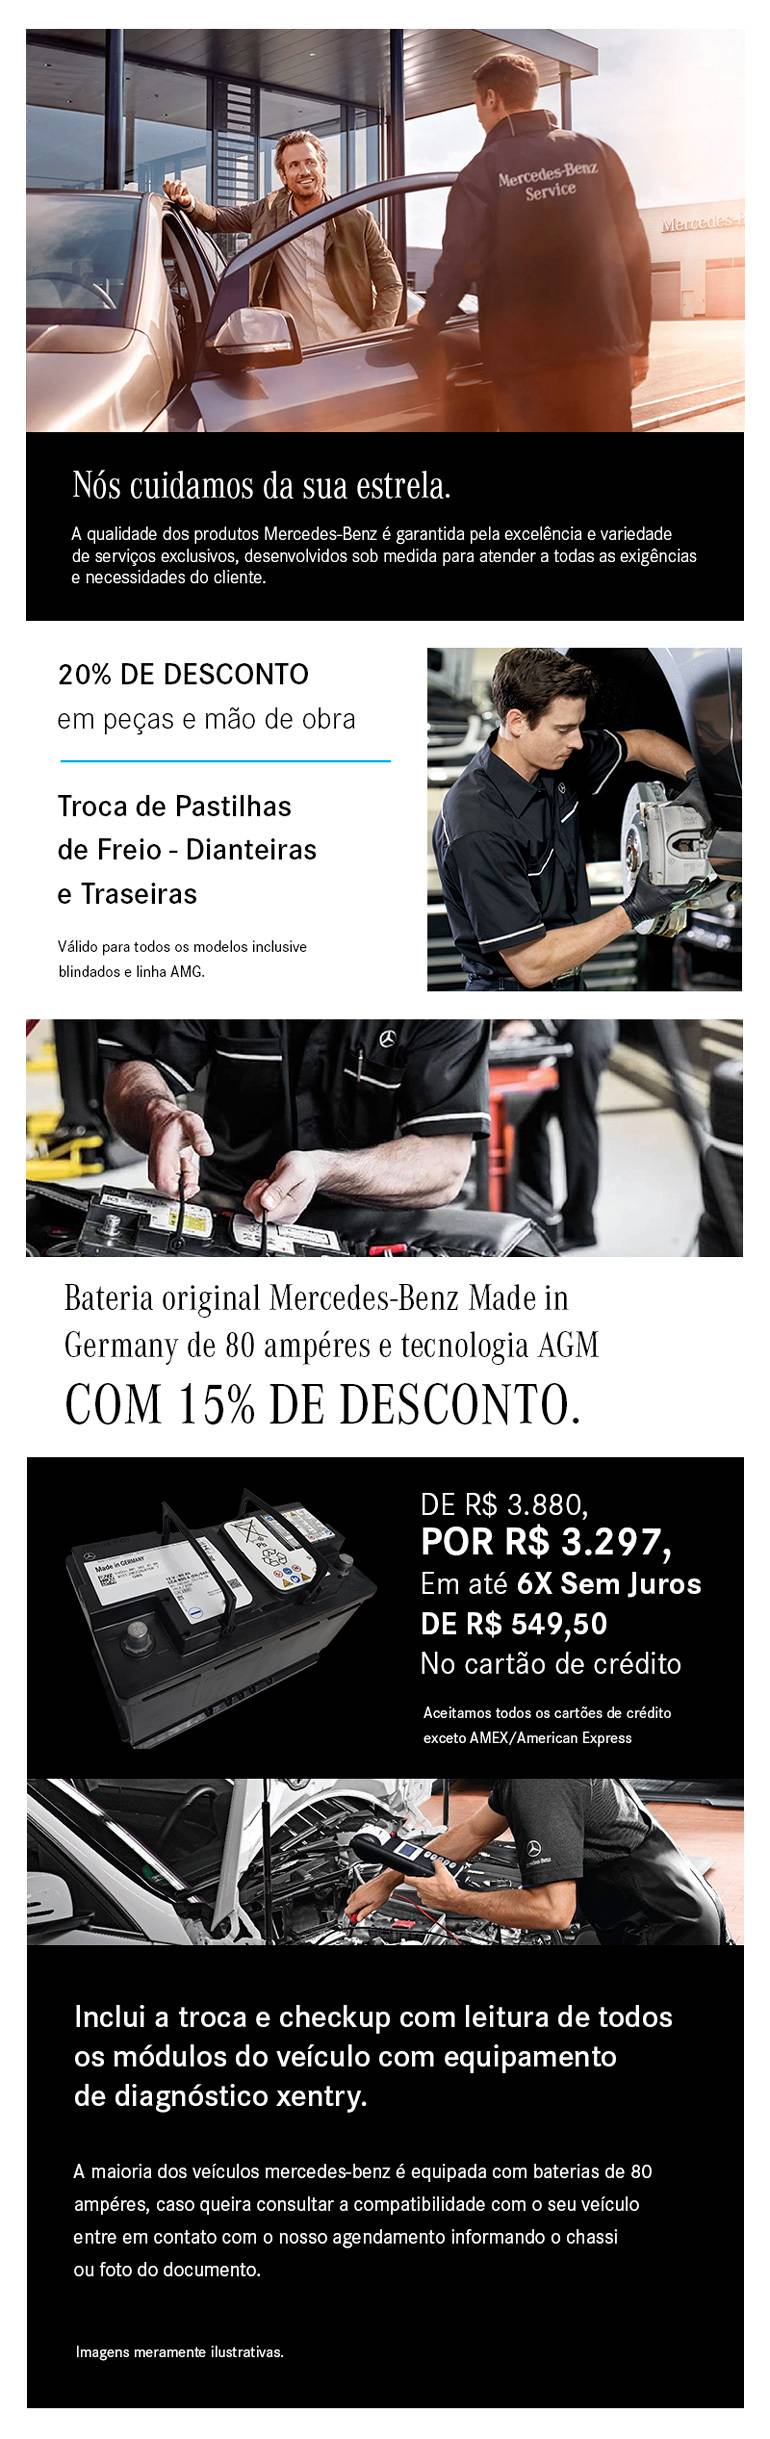 Bateria Mercedes